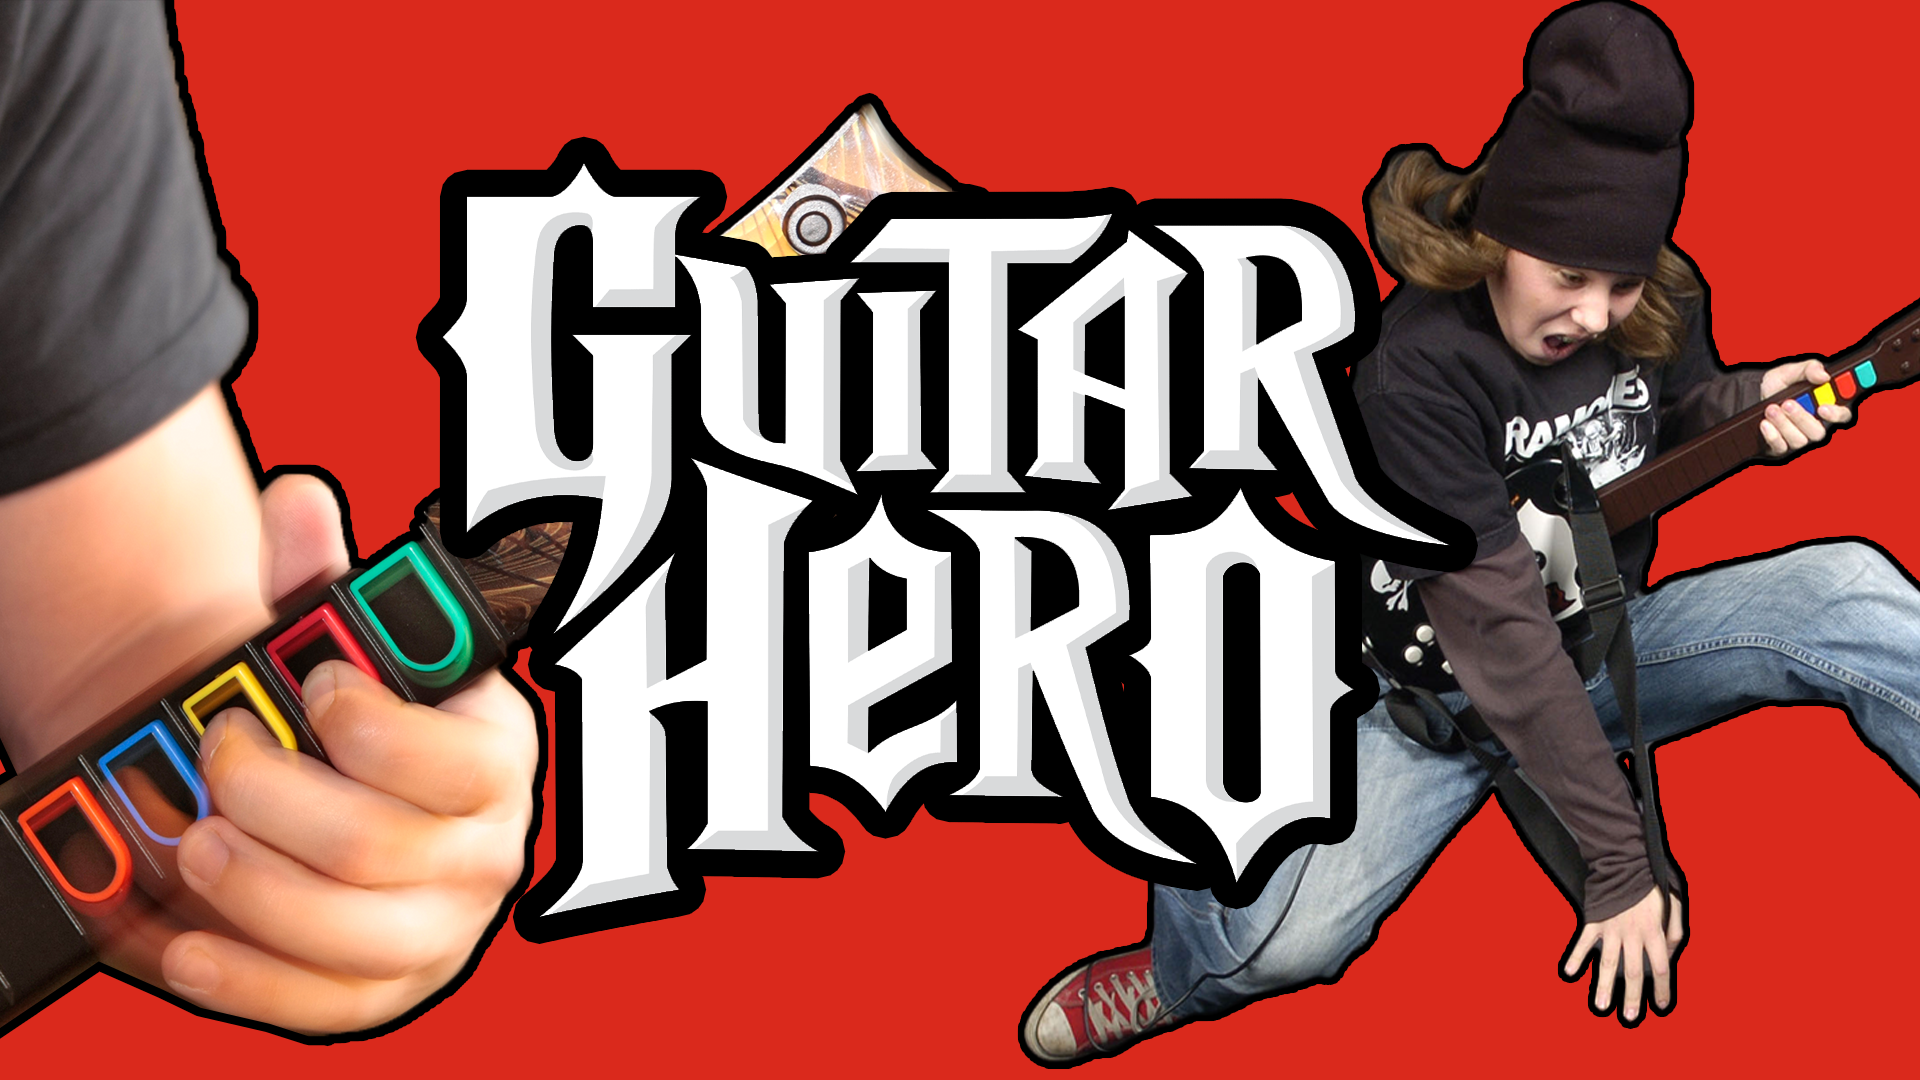 Guitar Hero' Creator Reveals Details of New Summer Game Release 'Rock Band  Blitz' (Q&A)